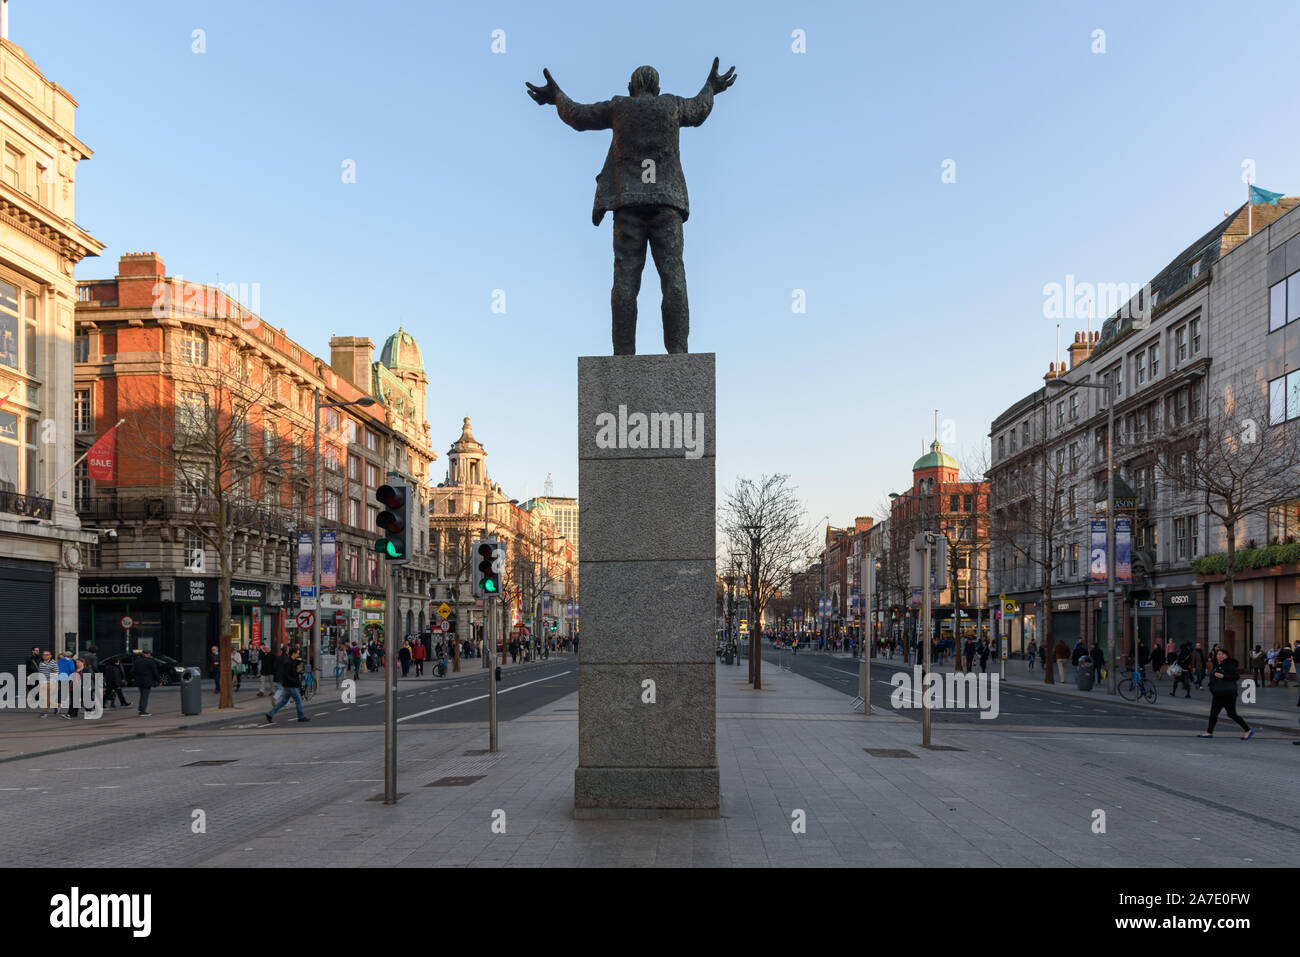 O'Connell Street, Dublín, Irlanda, 06 de abril de 2015: Jim Larkin estatua con las manos abiertas la postura en Dublin en O'Connell Street. Foto de stock